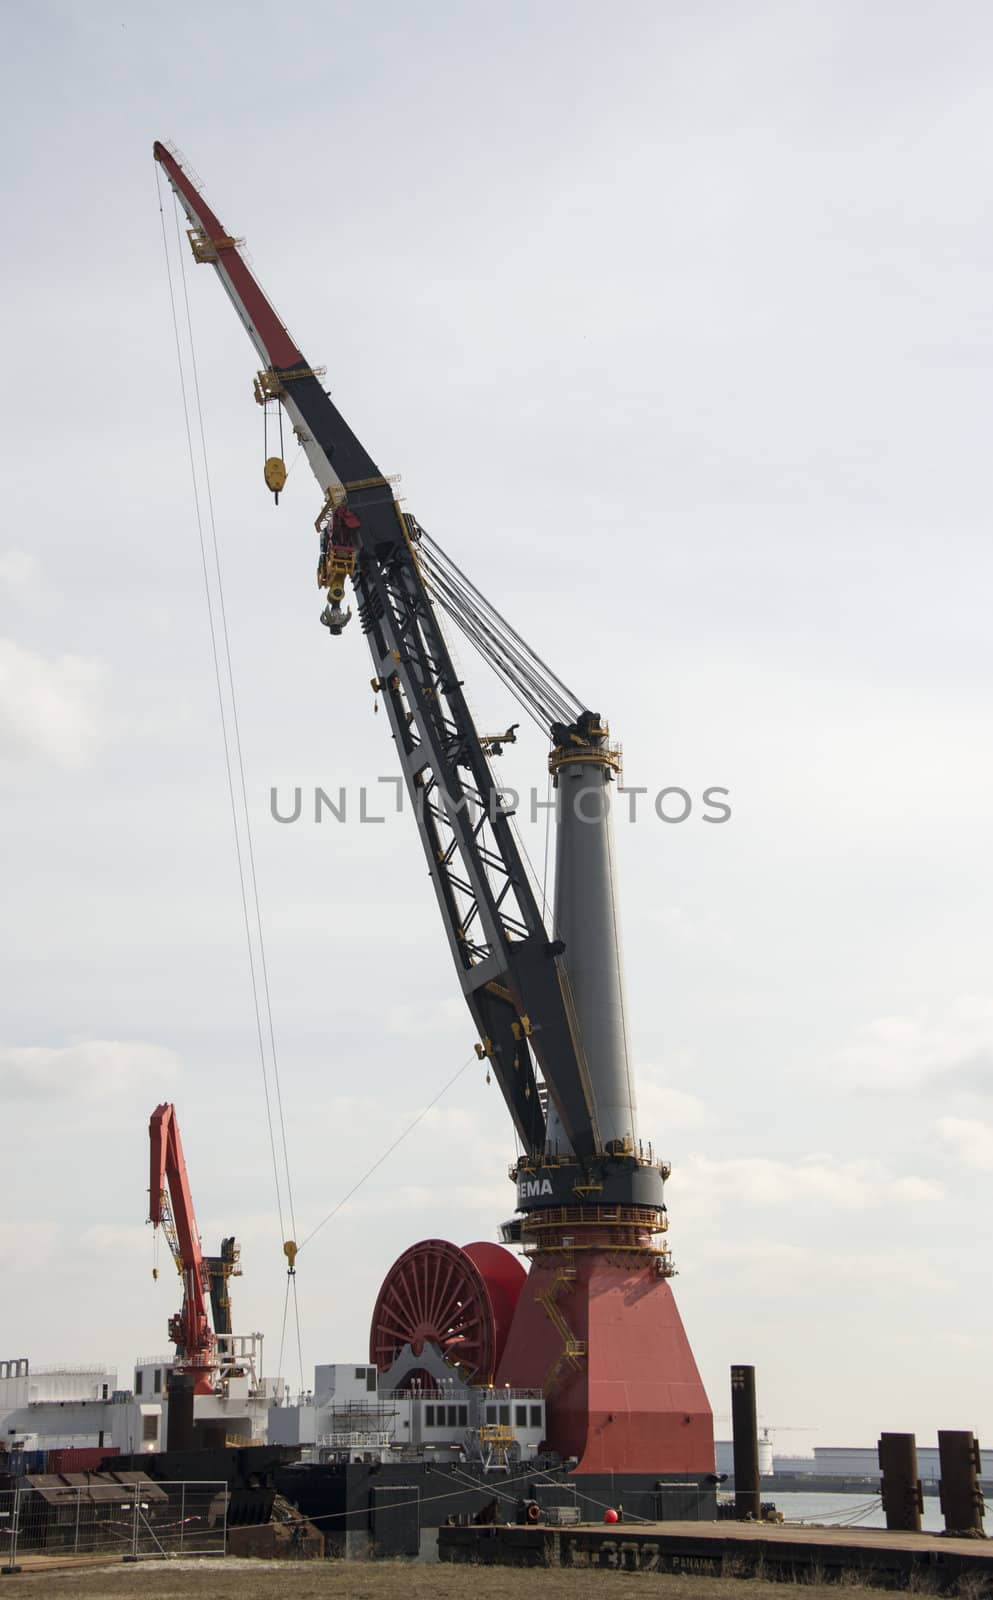 giant crane platform in holland by compuinfoto